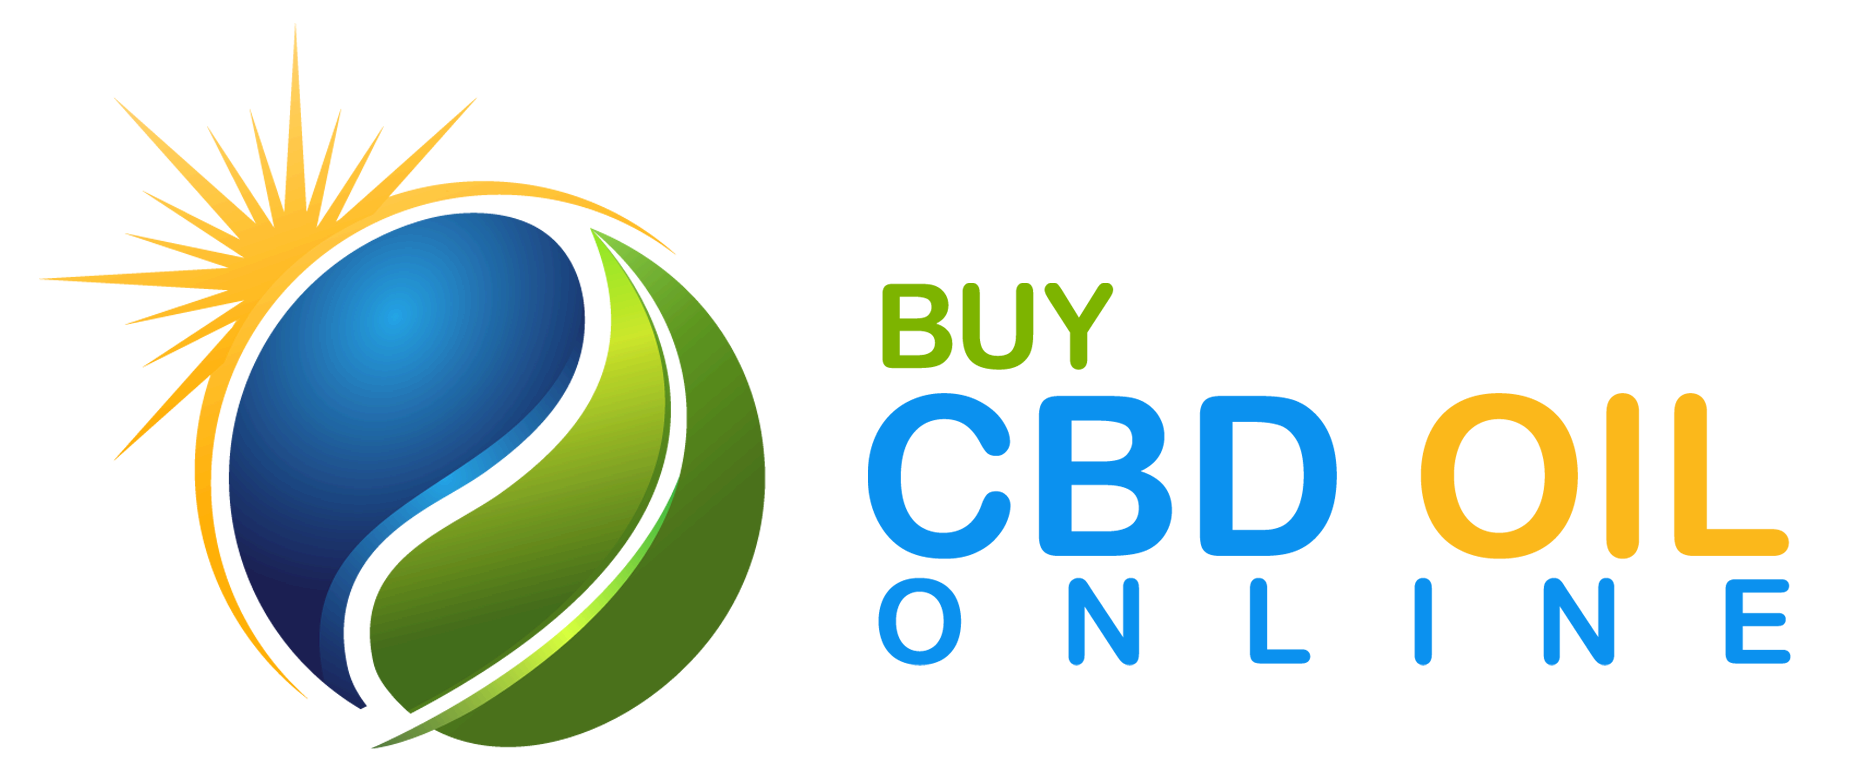 Buy CBD Oil Online Functional Remedies Full Spectrum Hemp Capsules 25mg